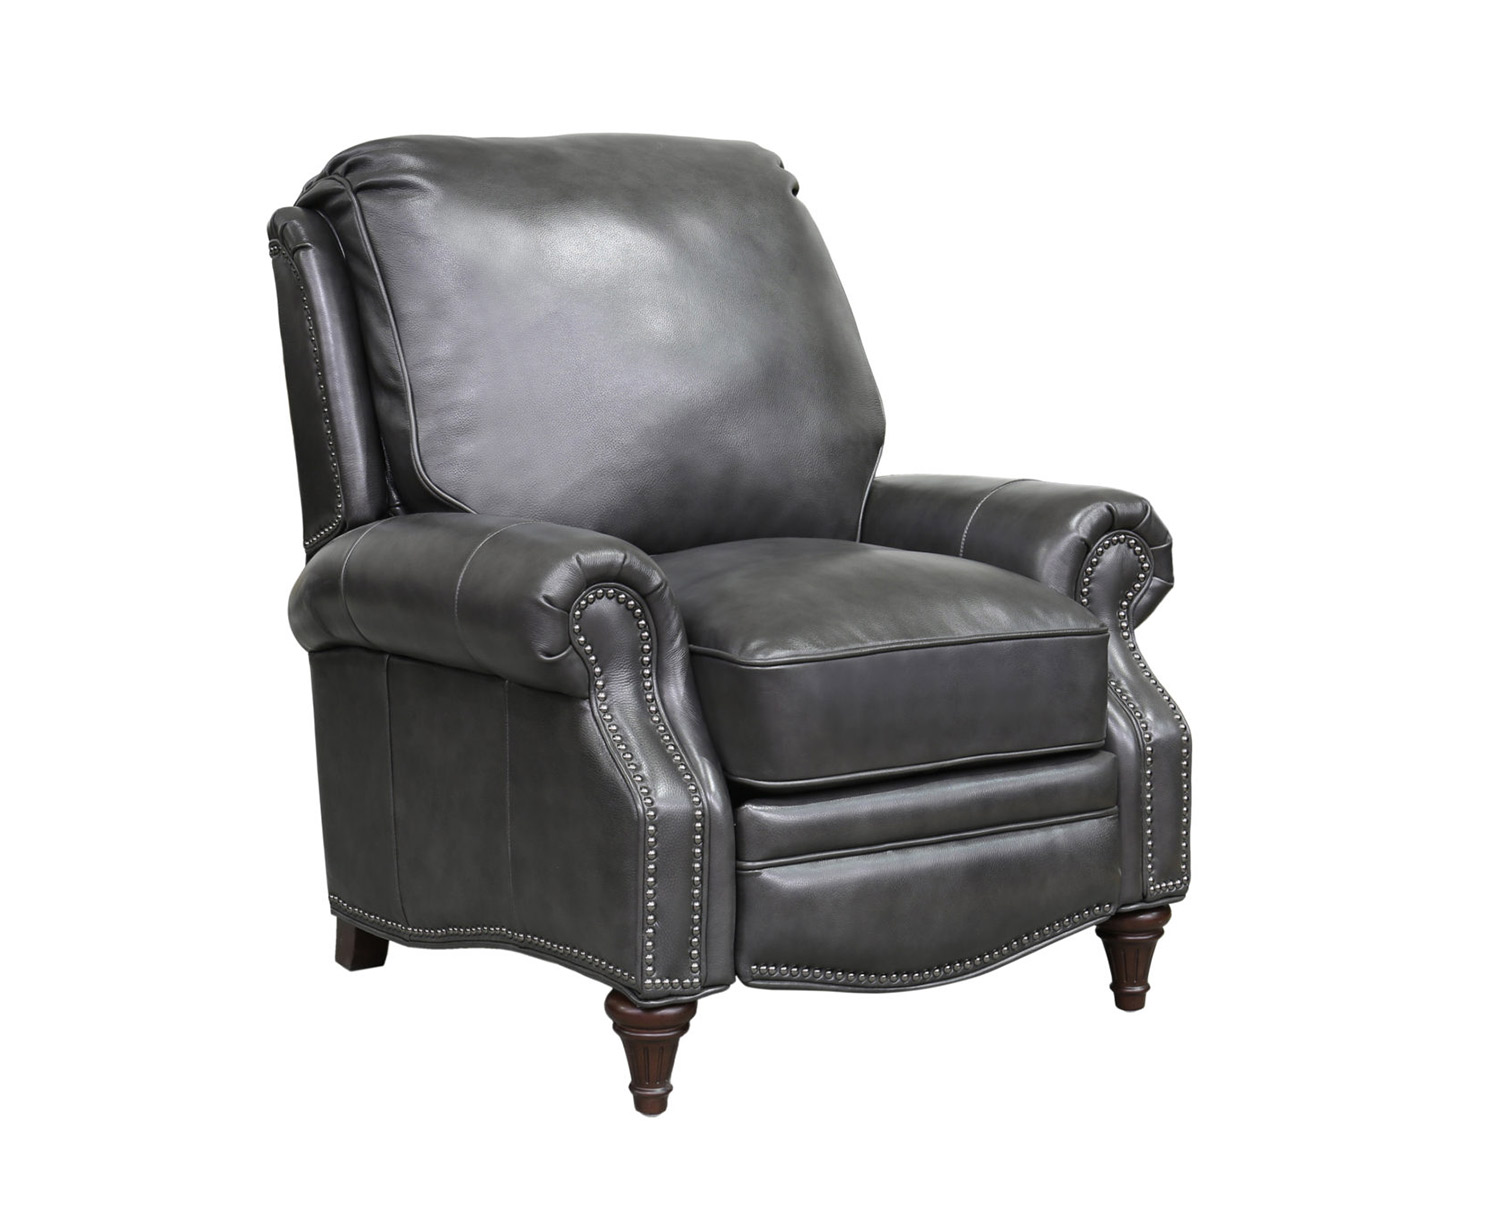 Barcalounger Avery Recliner Chair - Wrenn Gray/all leather